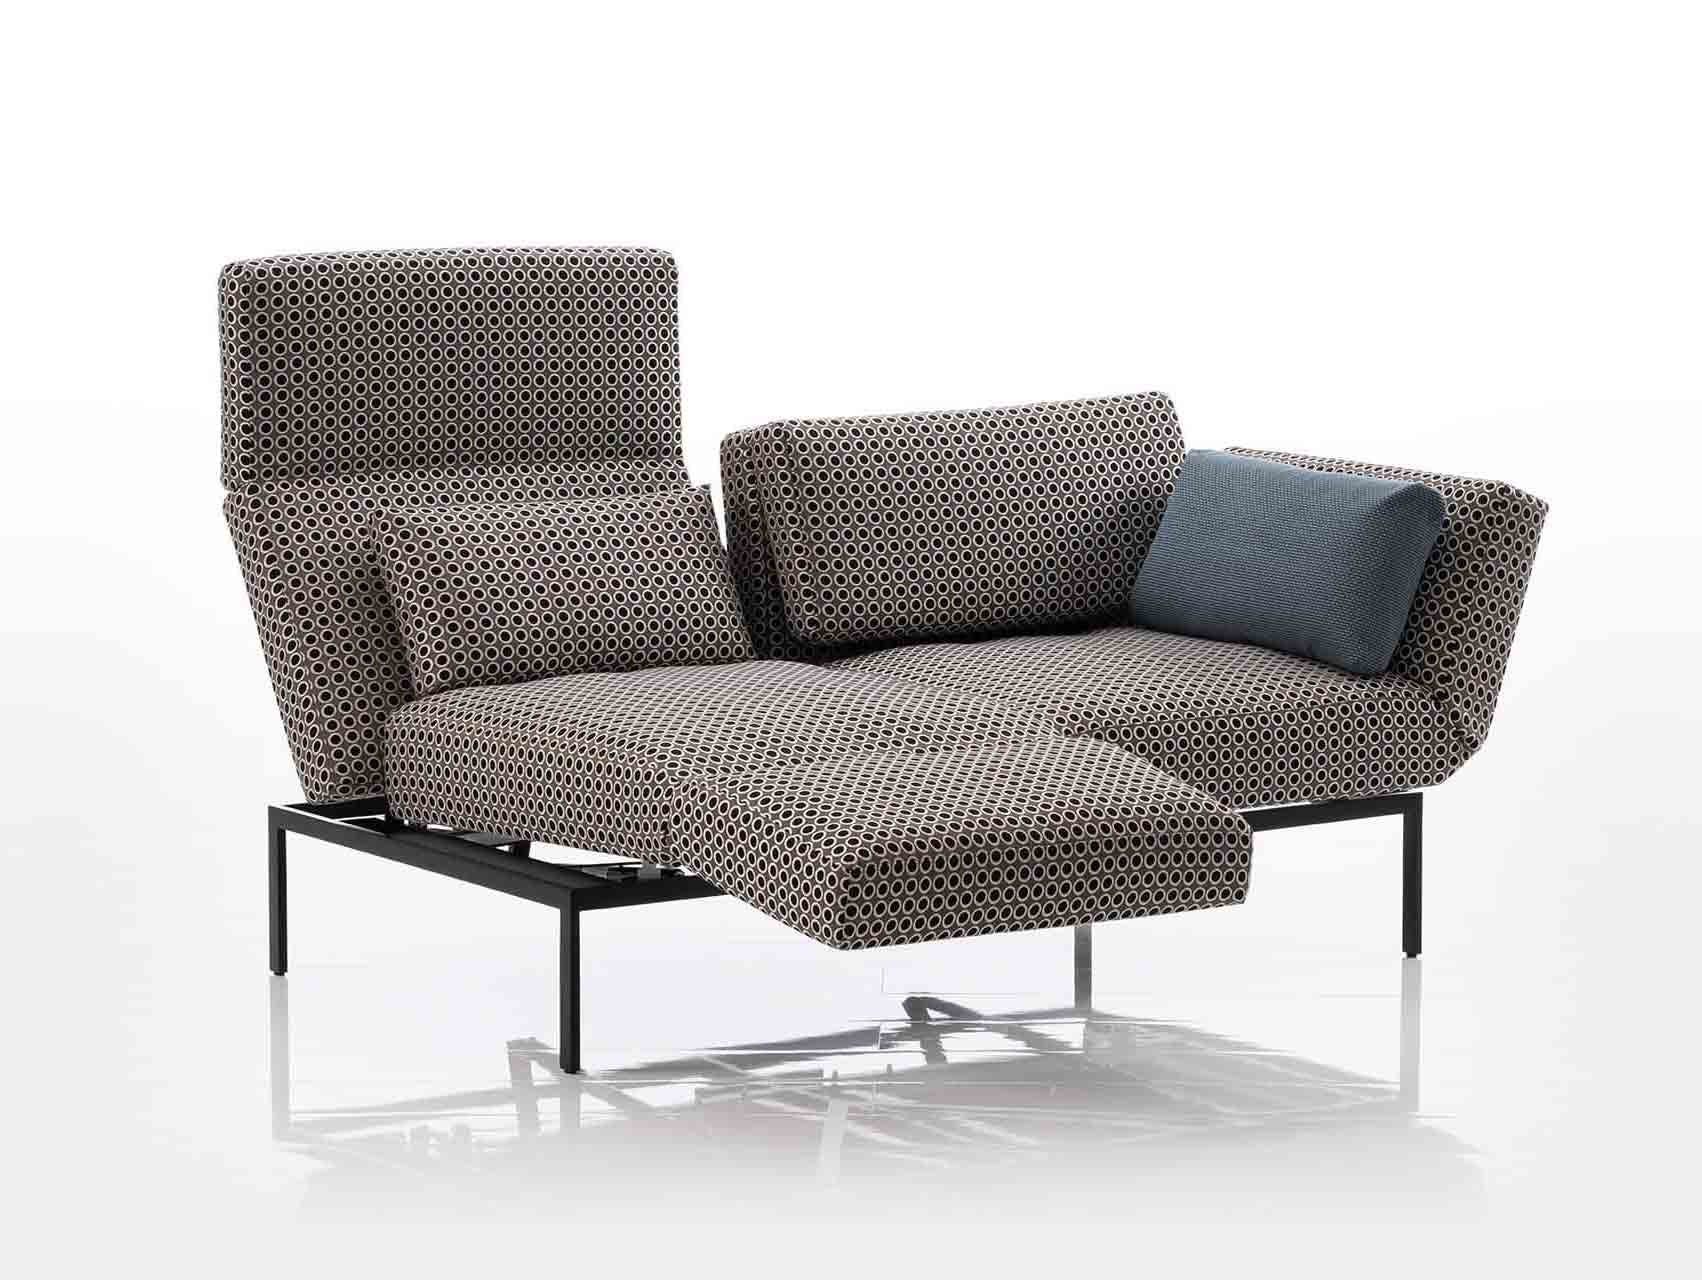 Sofa with 2 swivel seats